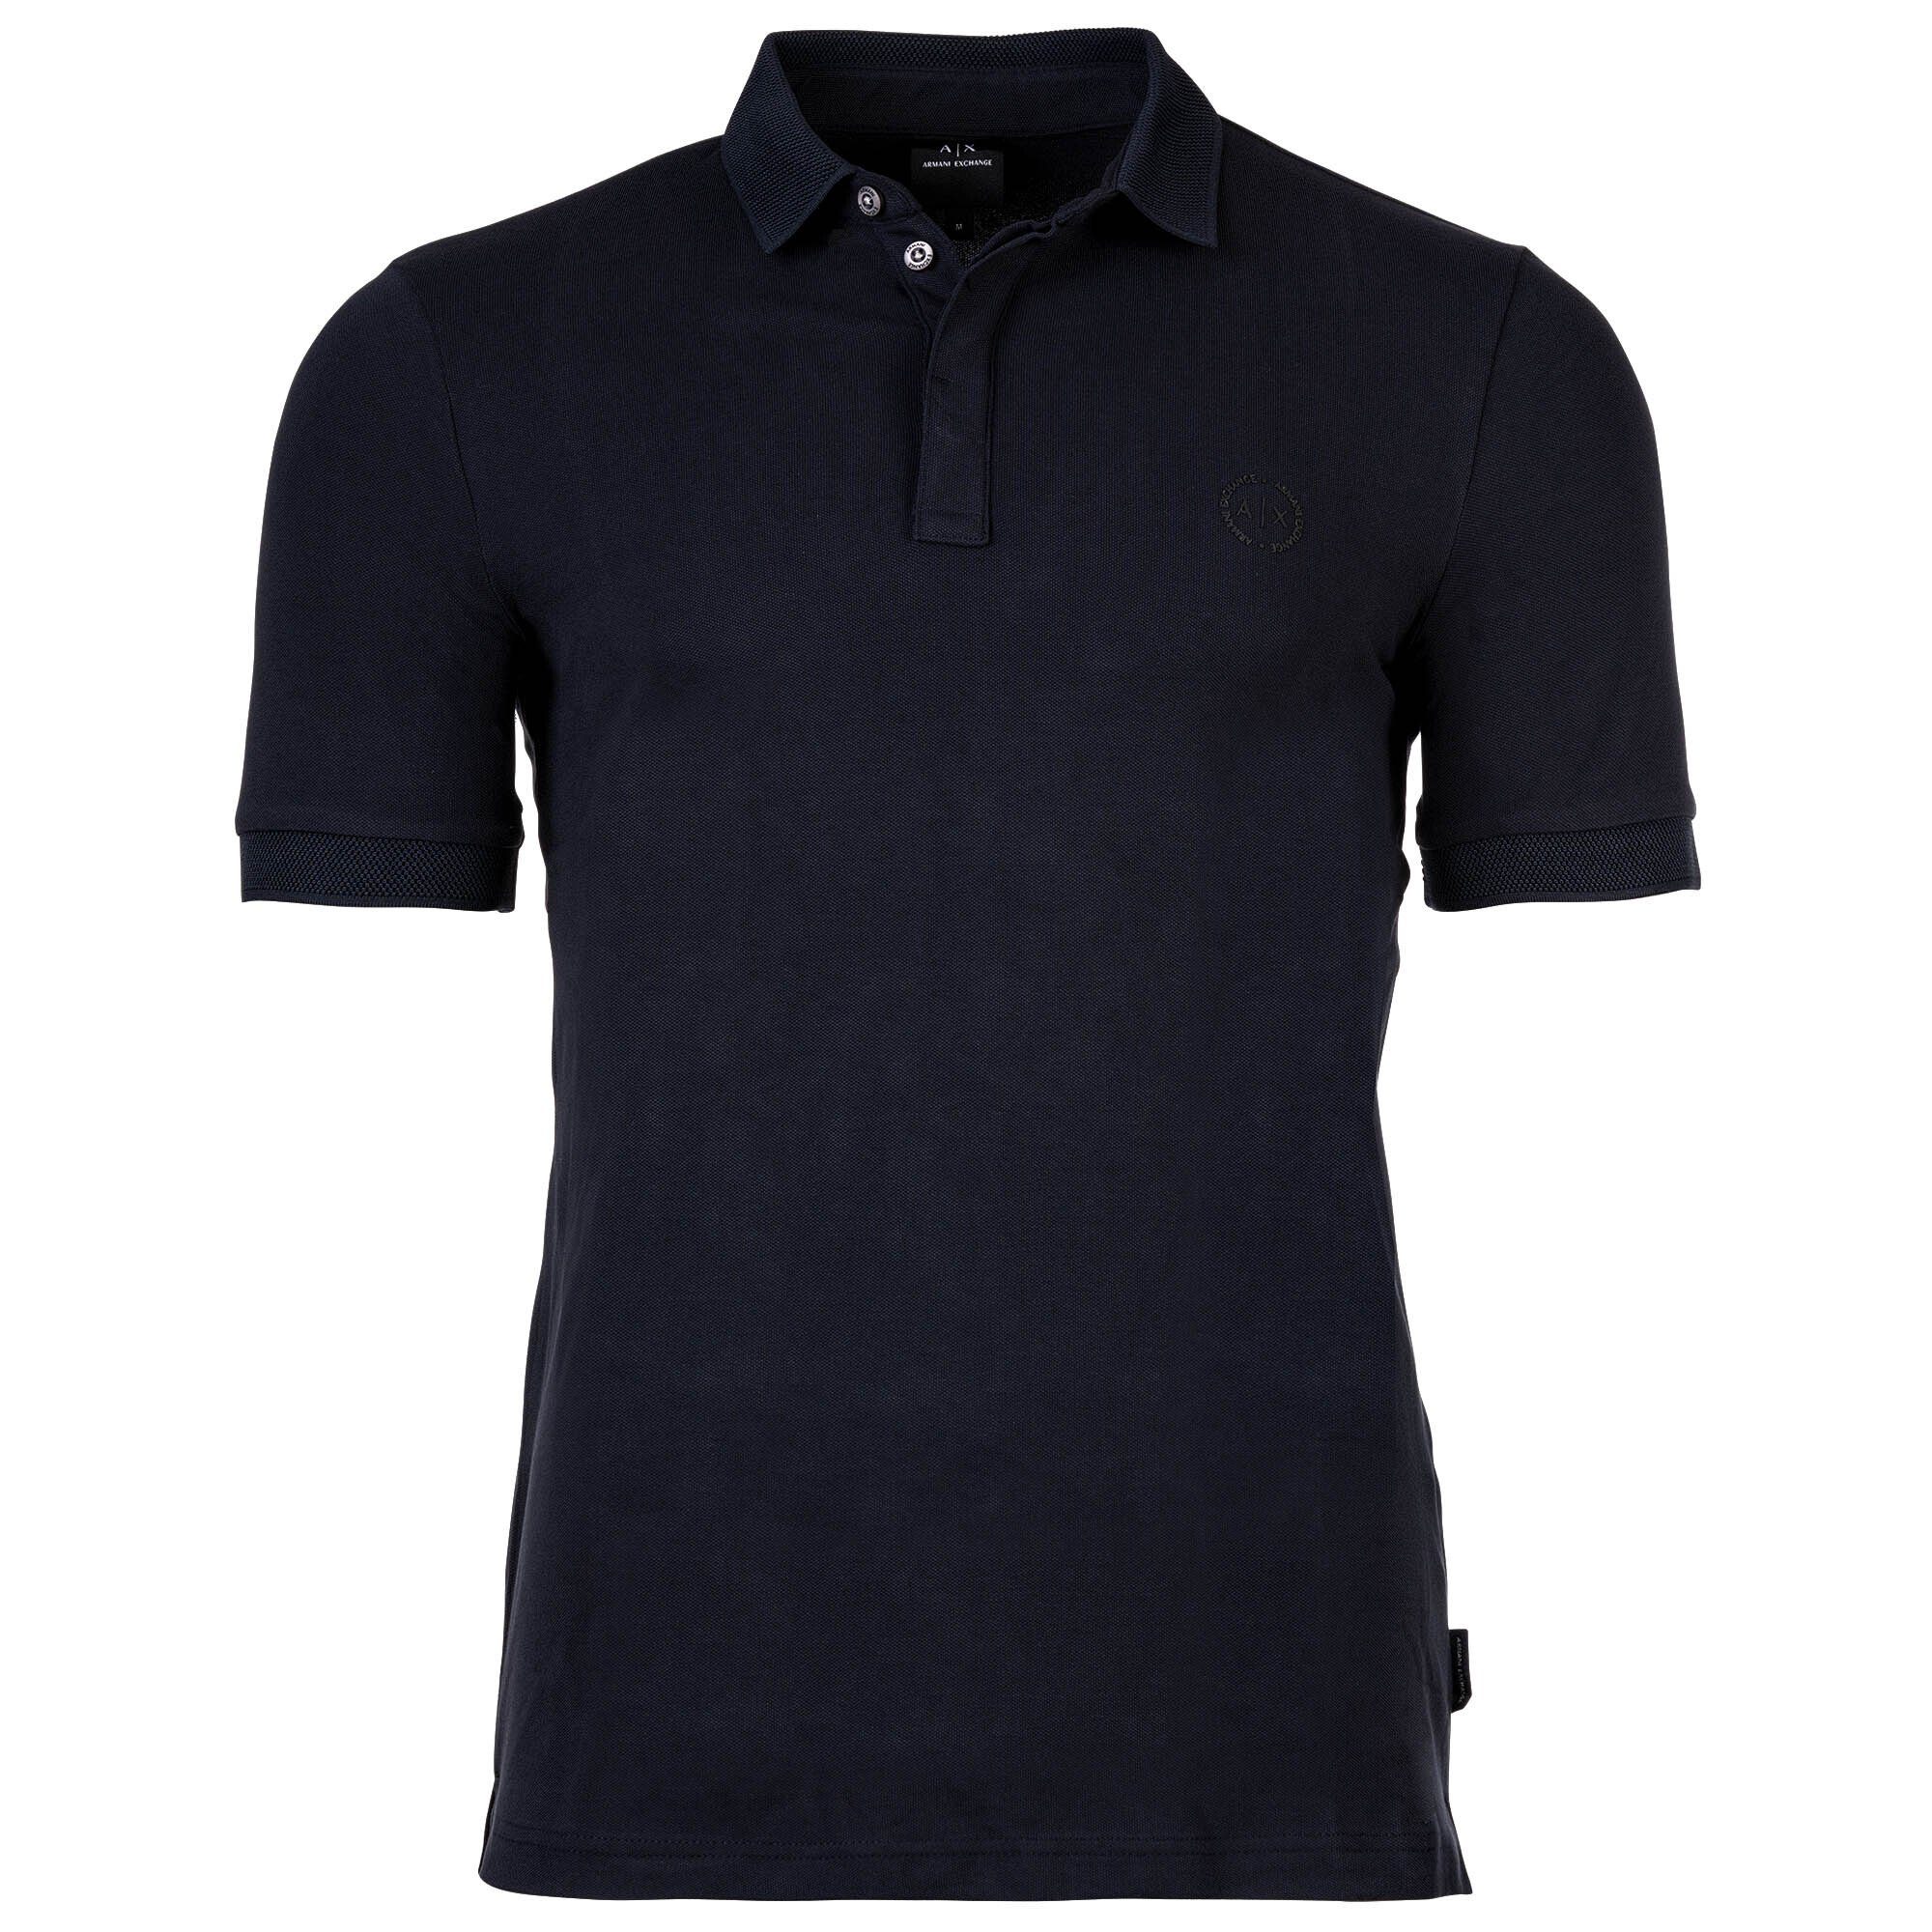 ARMANI EXCHANGE Poloshirt Herren Poloshirt - Slim fit, einfarbig, Cotton Marine | Sport-Poloshirts